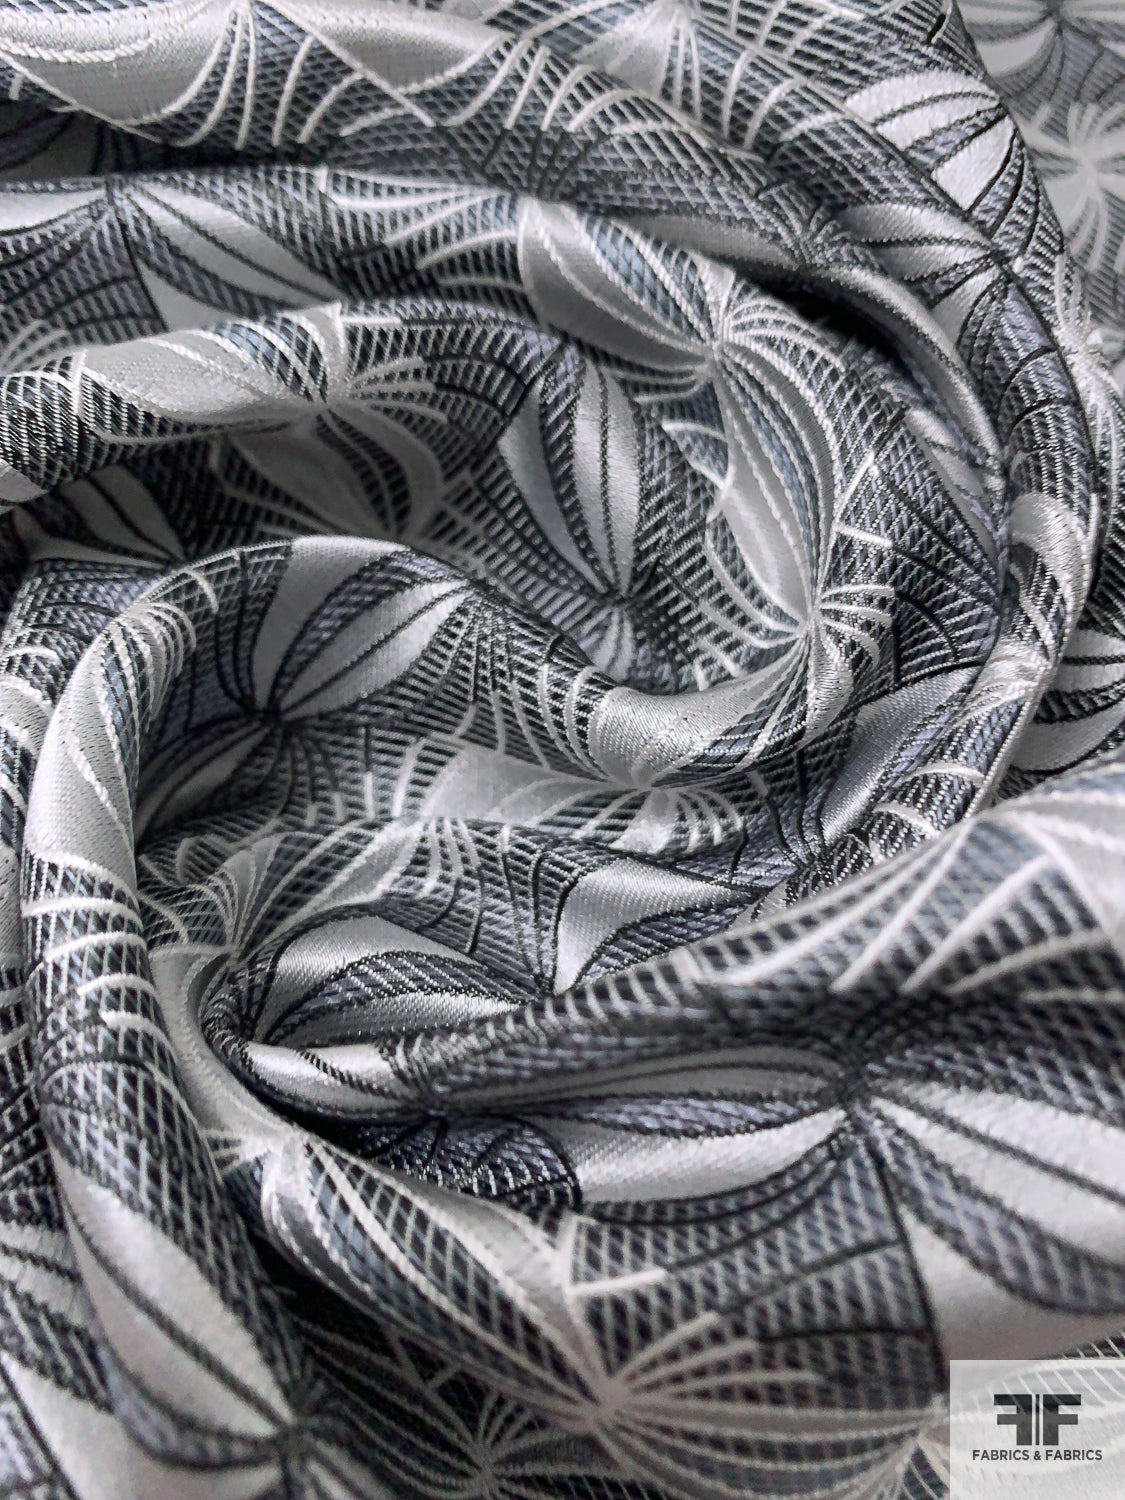 Tentacle Web Silk Necktie Jacquard Brocade - Black / Light Grey / White